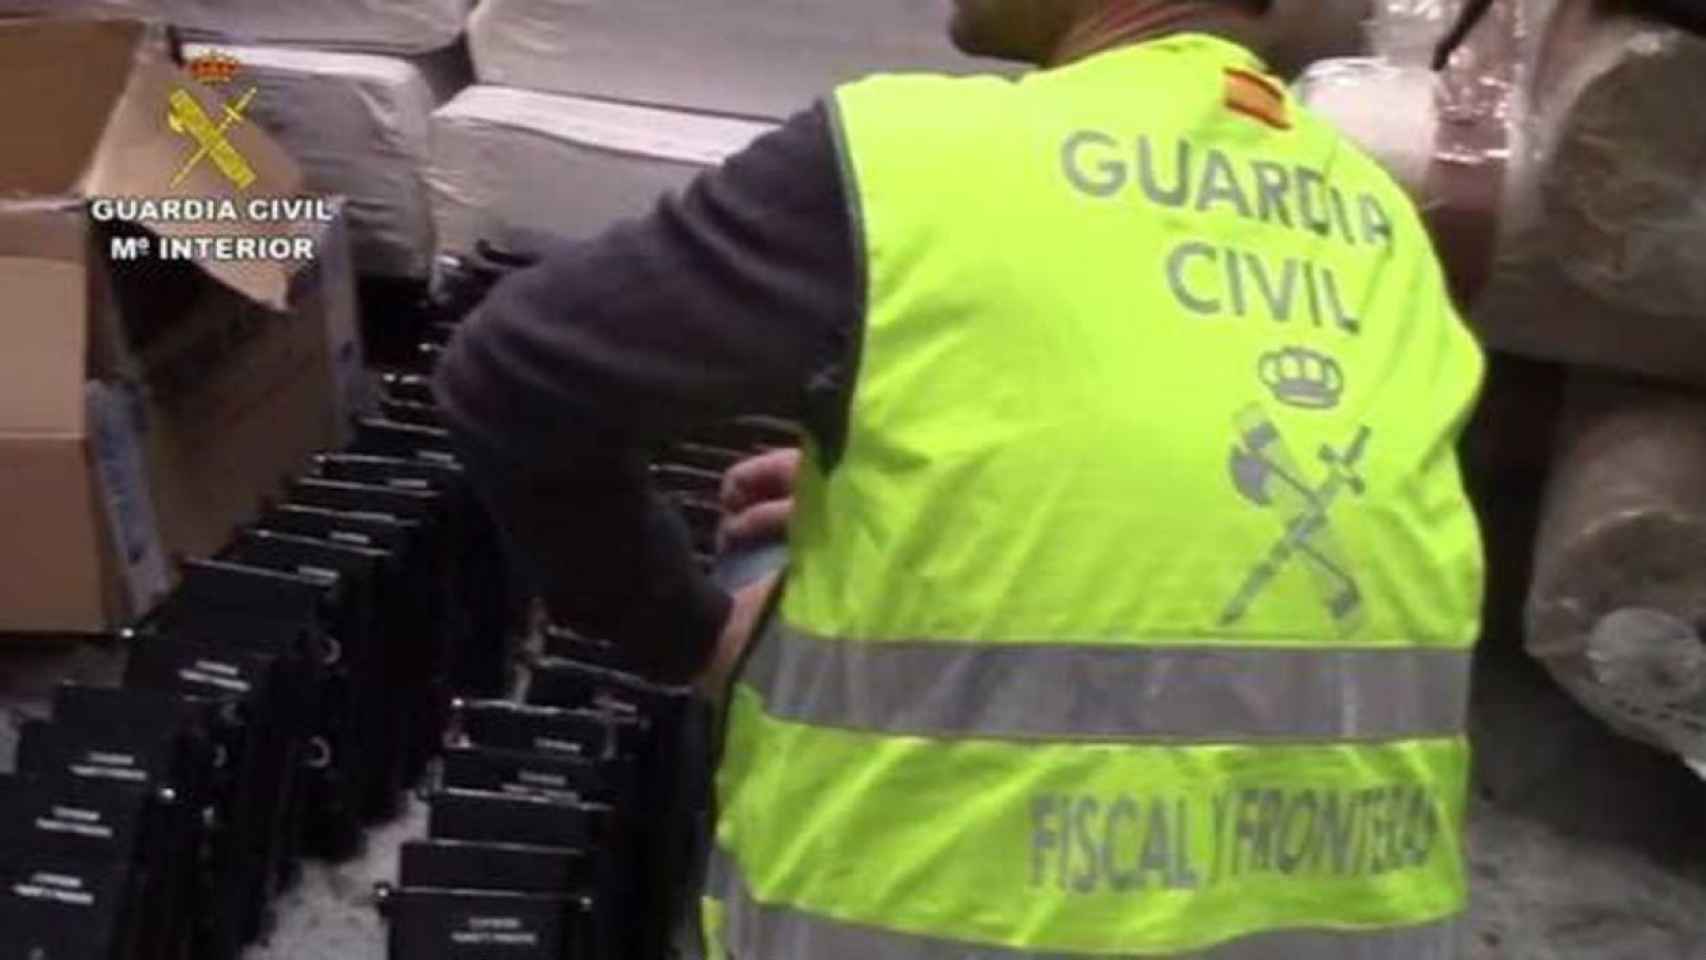 La Guardia Civil ha incautado 3 kilos de cocaína en el puerto de Barcelona / GC